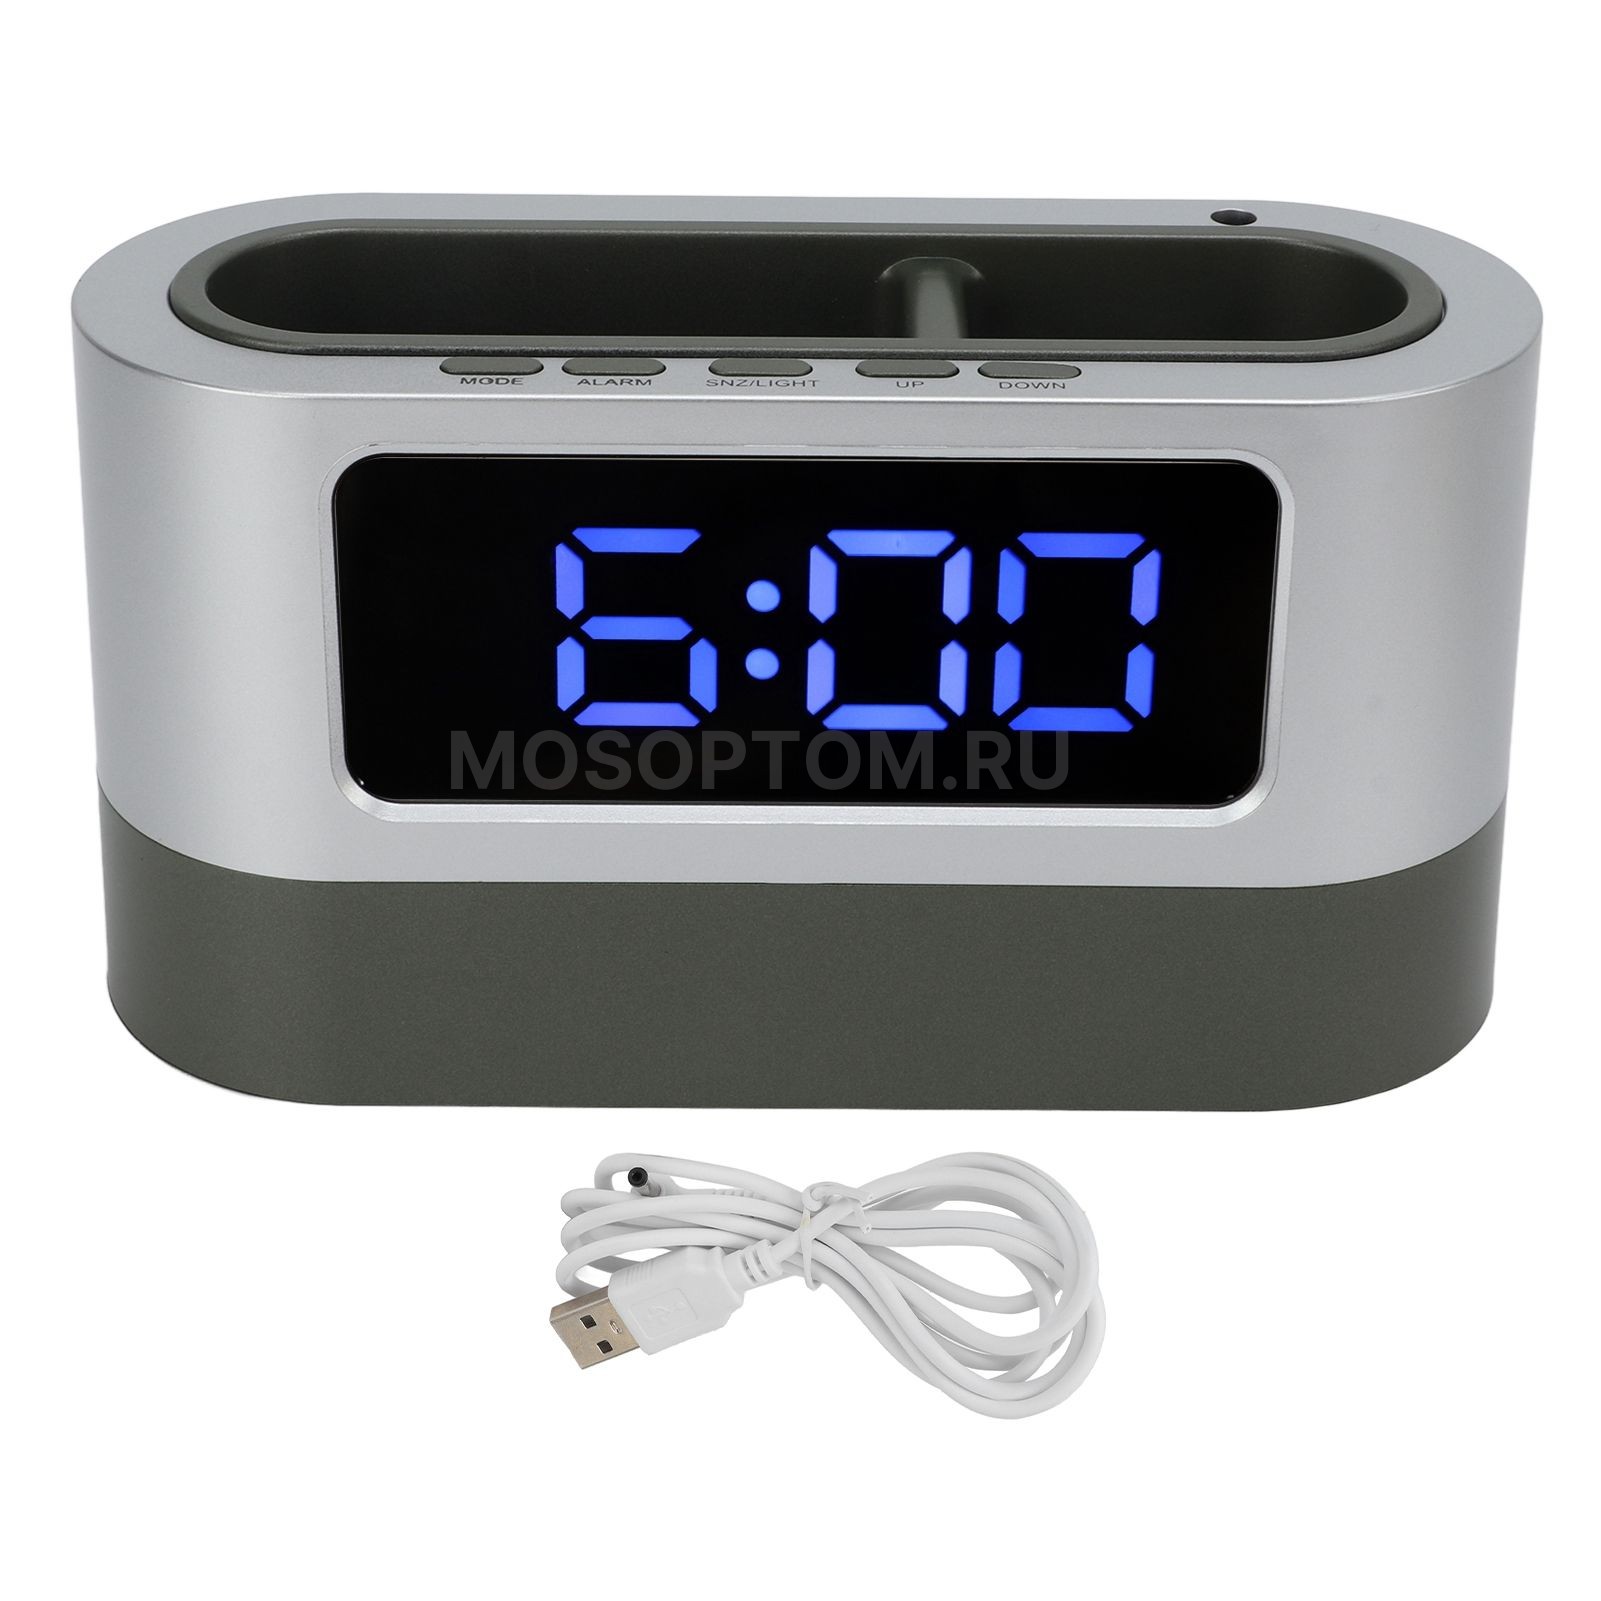 Часы-органайзер, с календарём, будильником, секундомером оптом